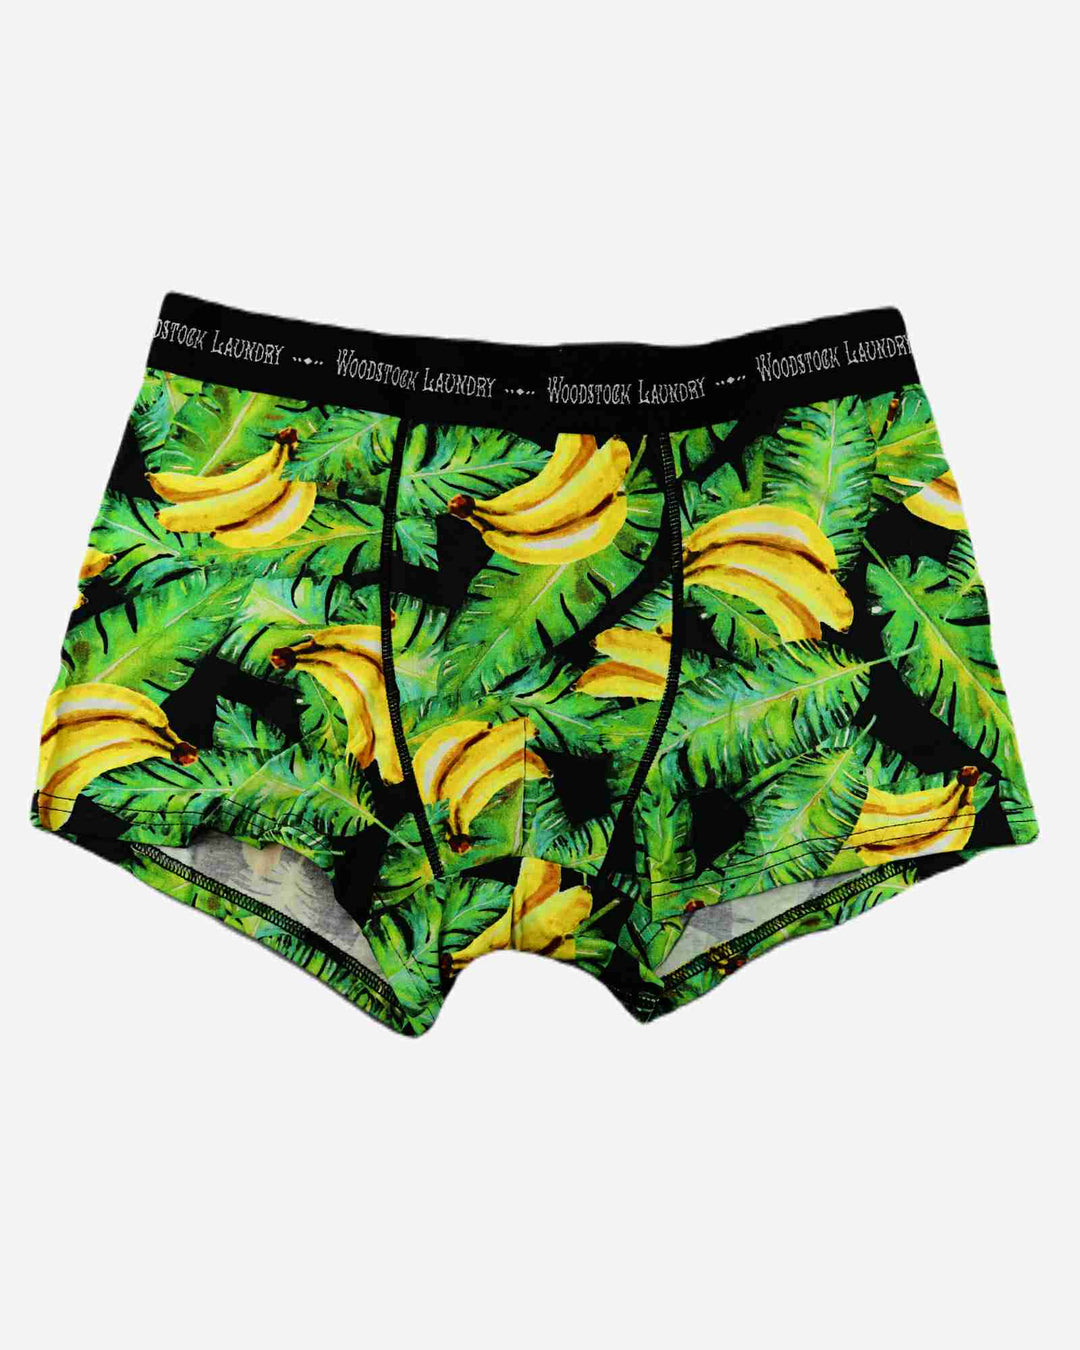 Mens boxer briefs bananas on leaves